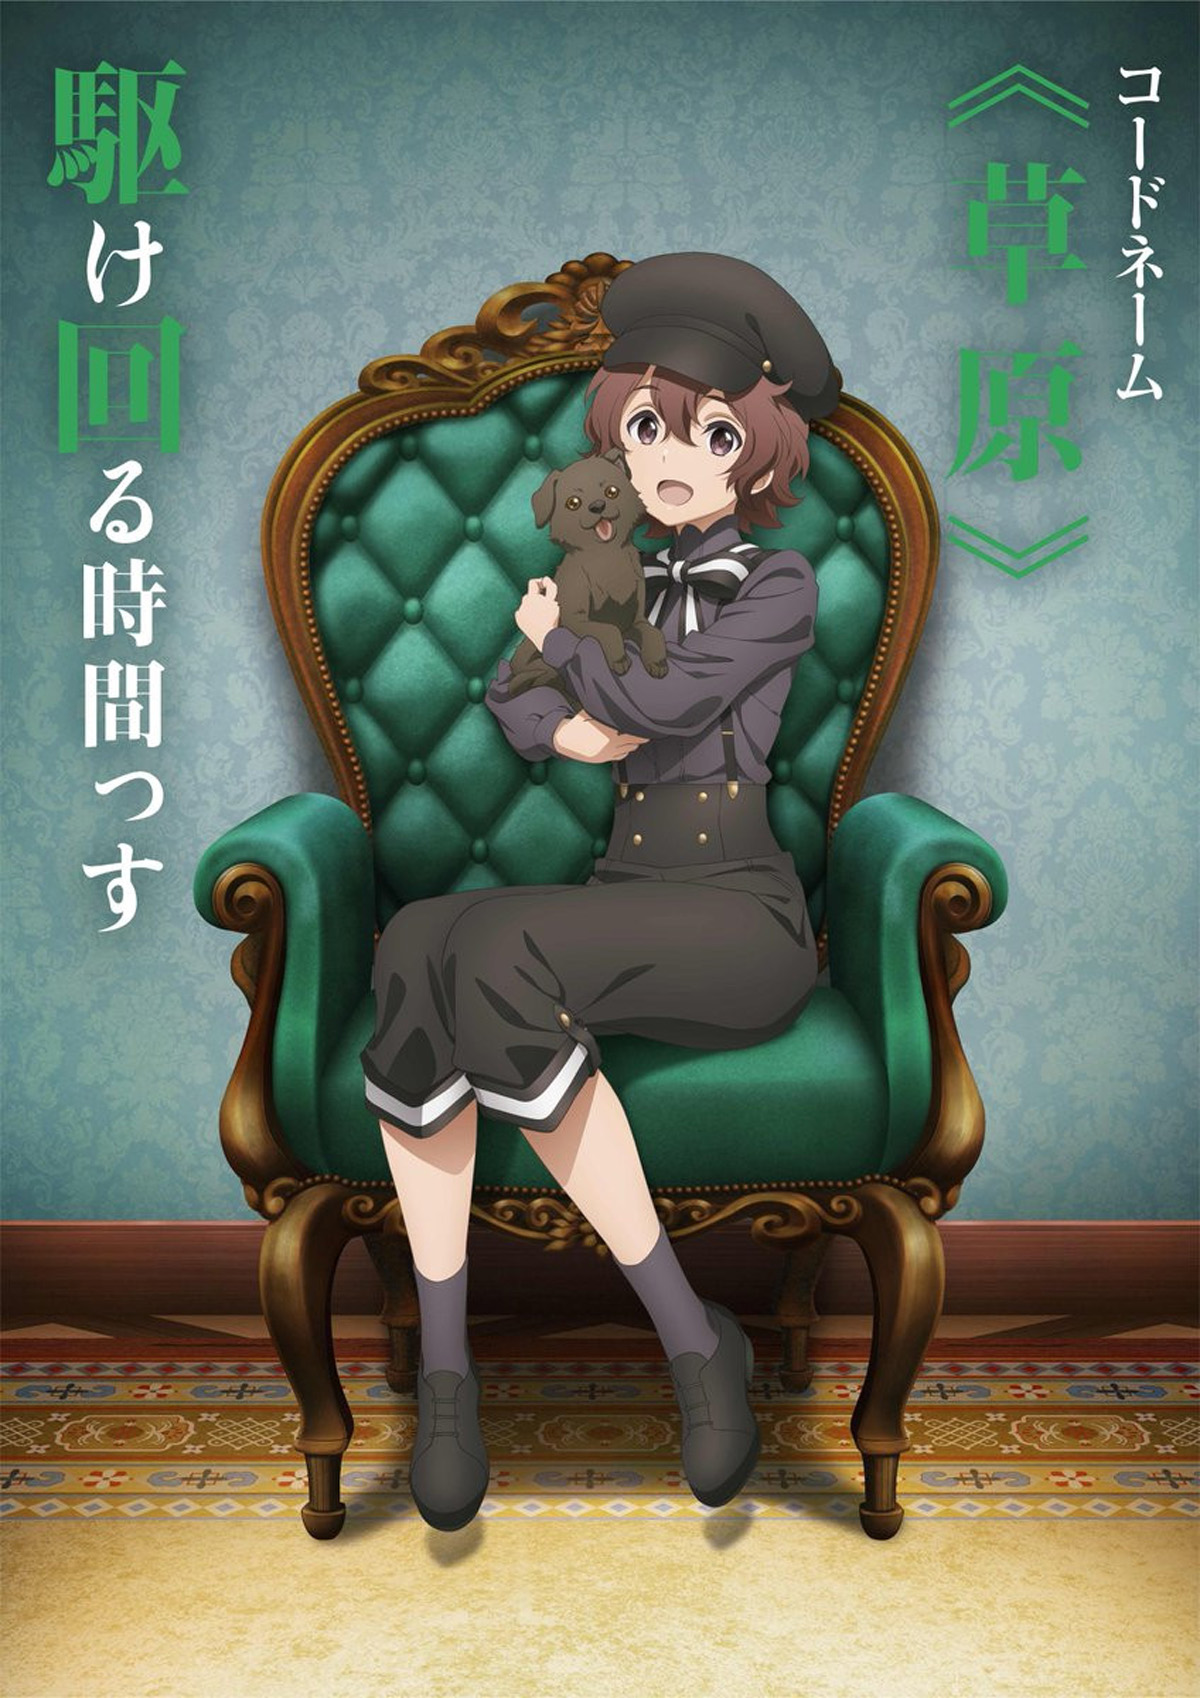 My Code Name is Charmer (manga) - Anime News Network